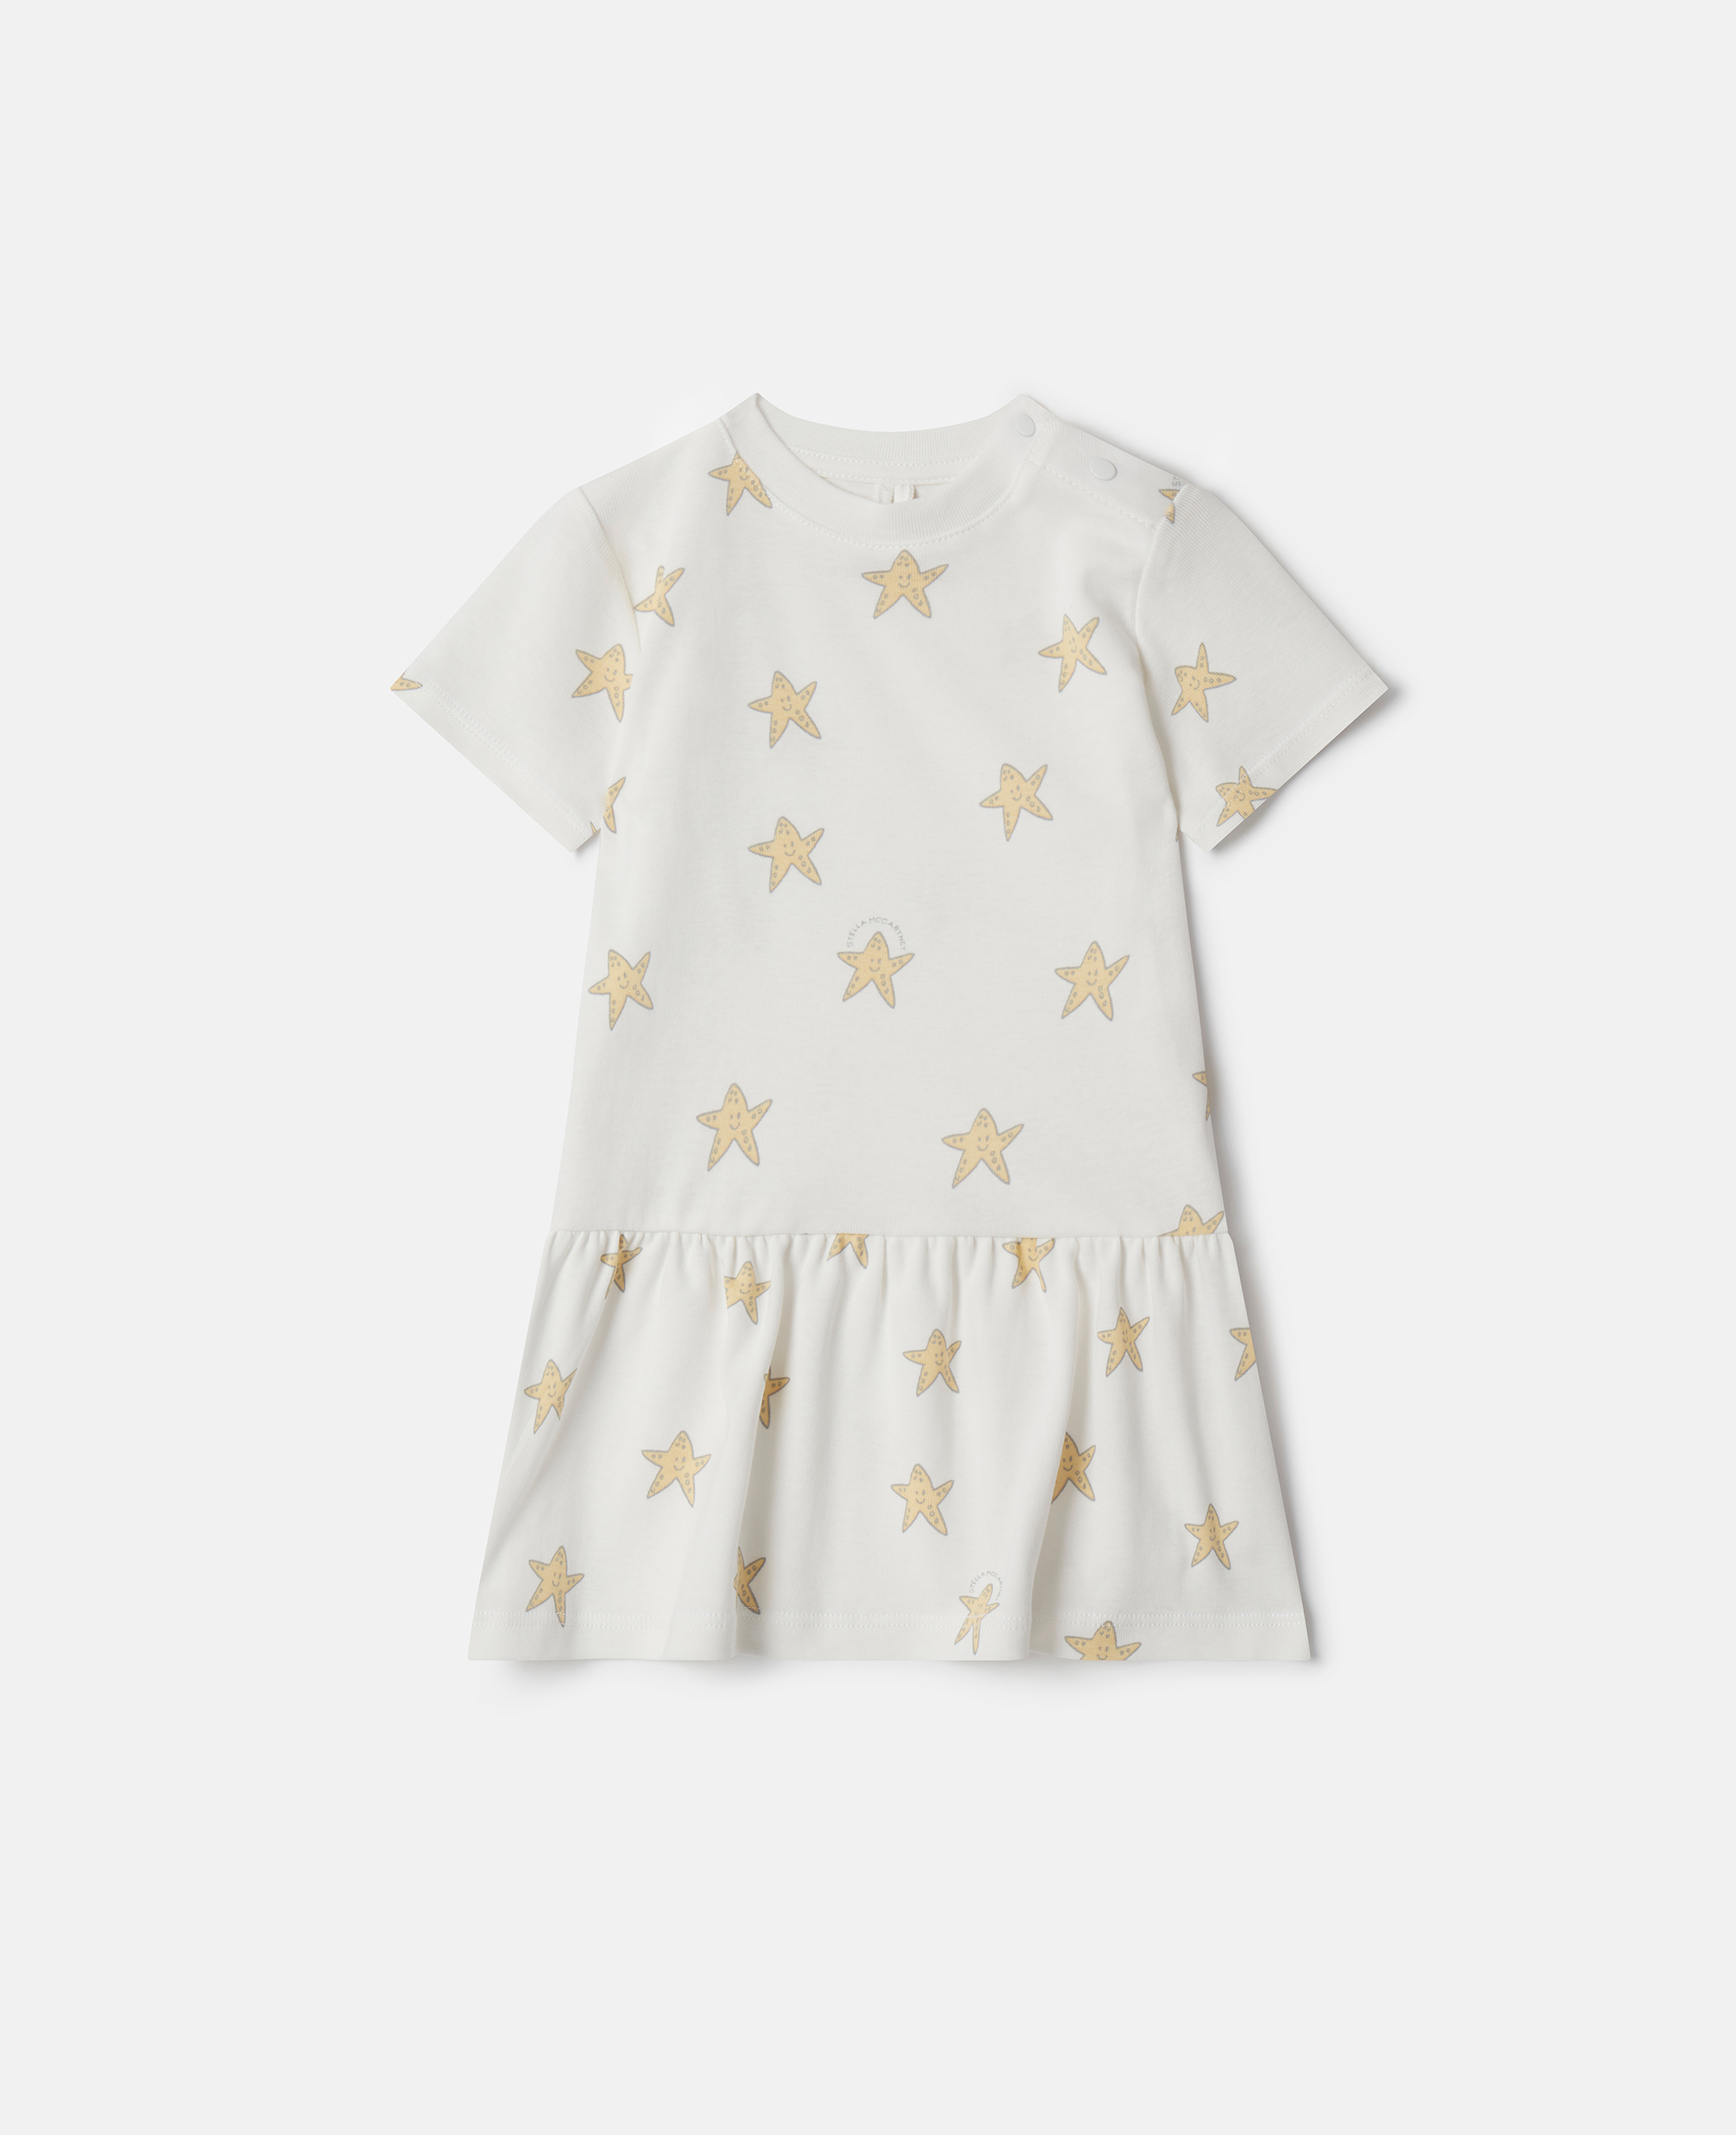 stella mccartney - robe à volants et imprimé smiling stella star, femme, ivoire/jaune, taille: 24m